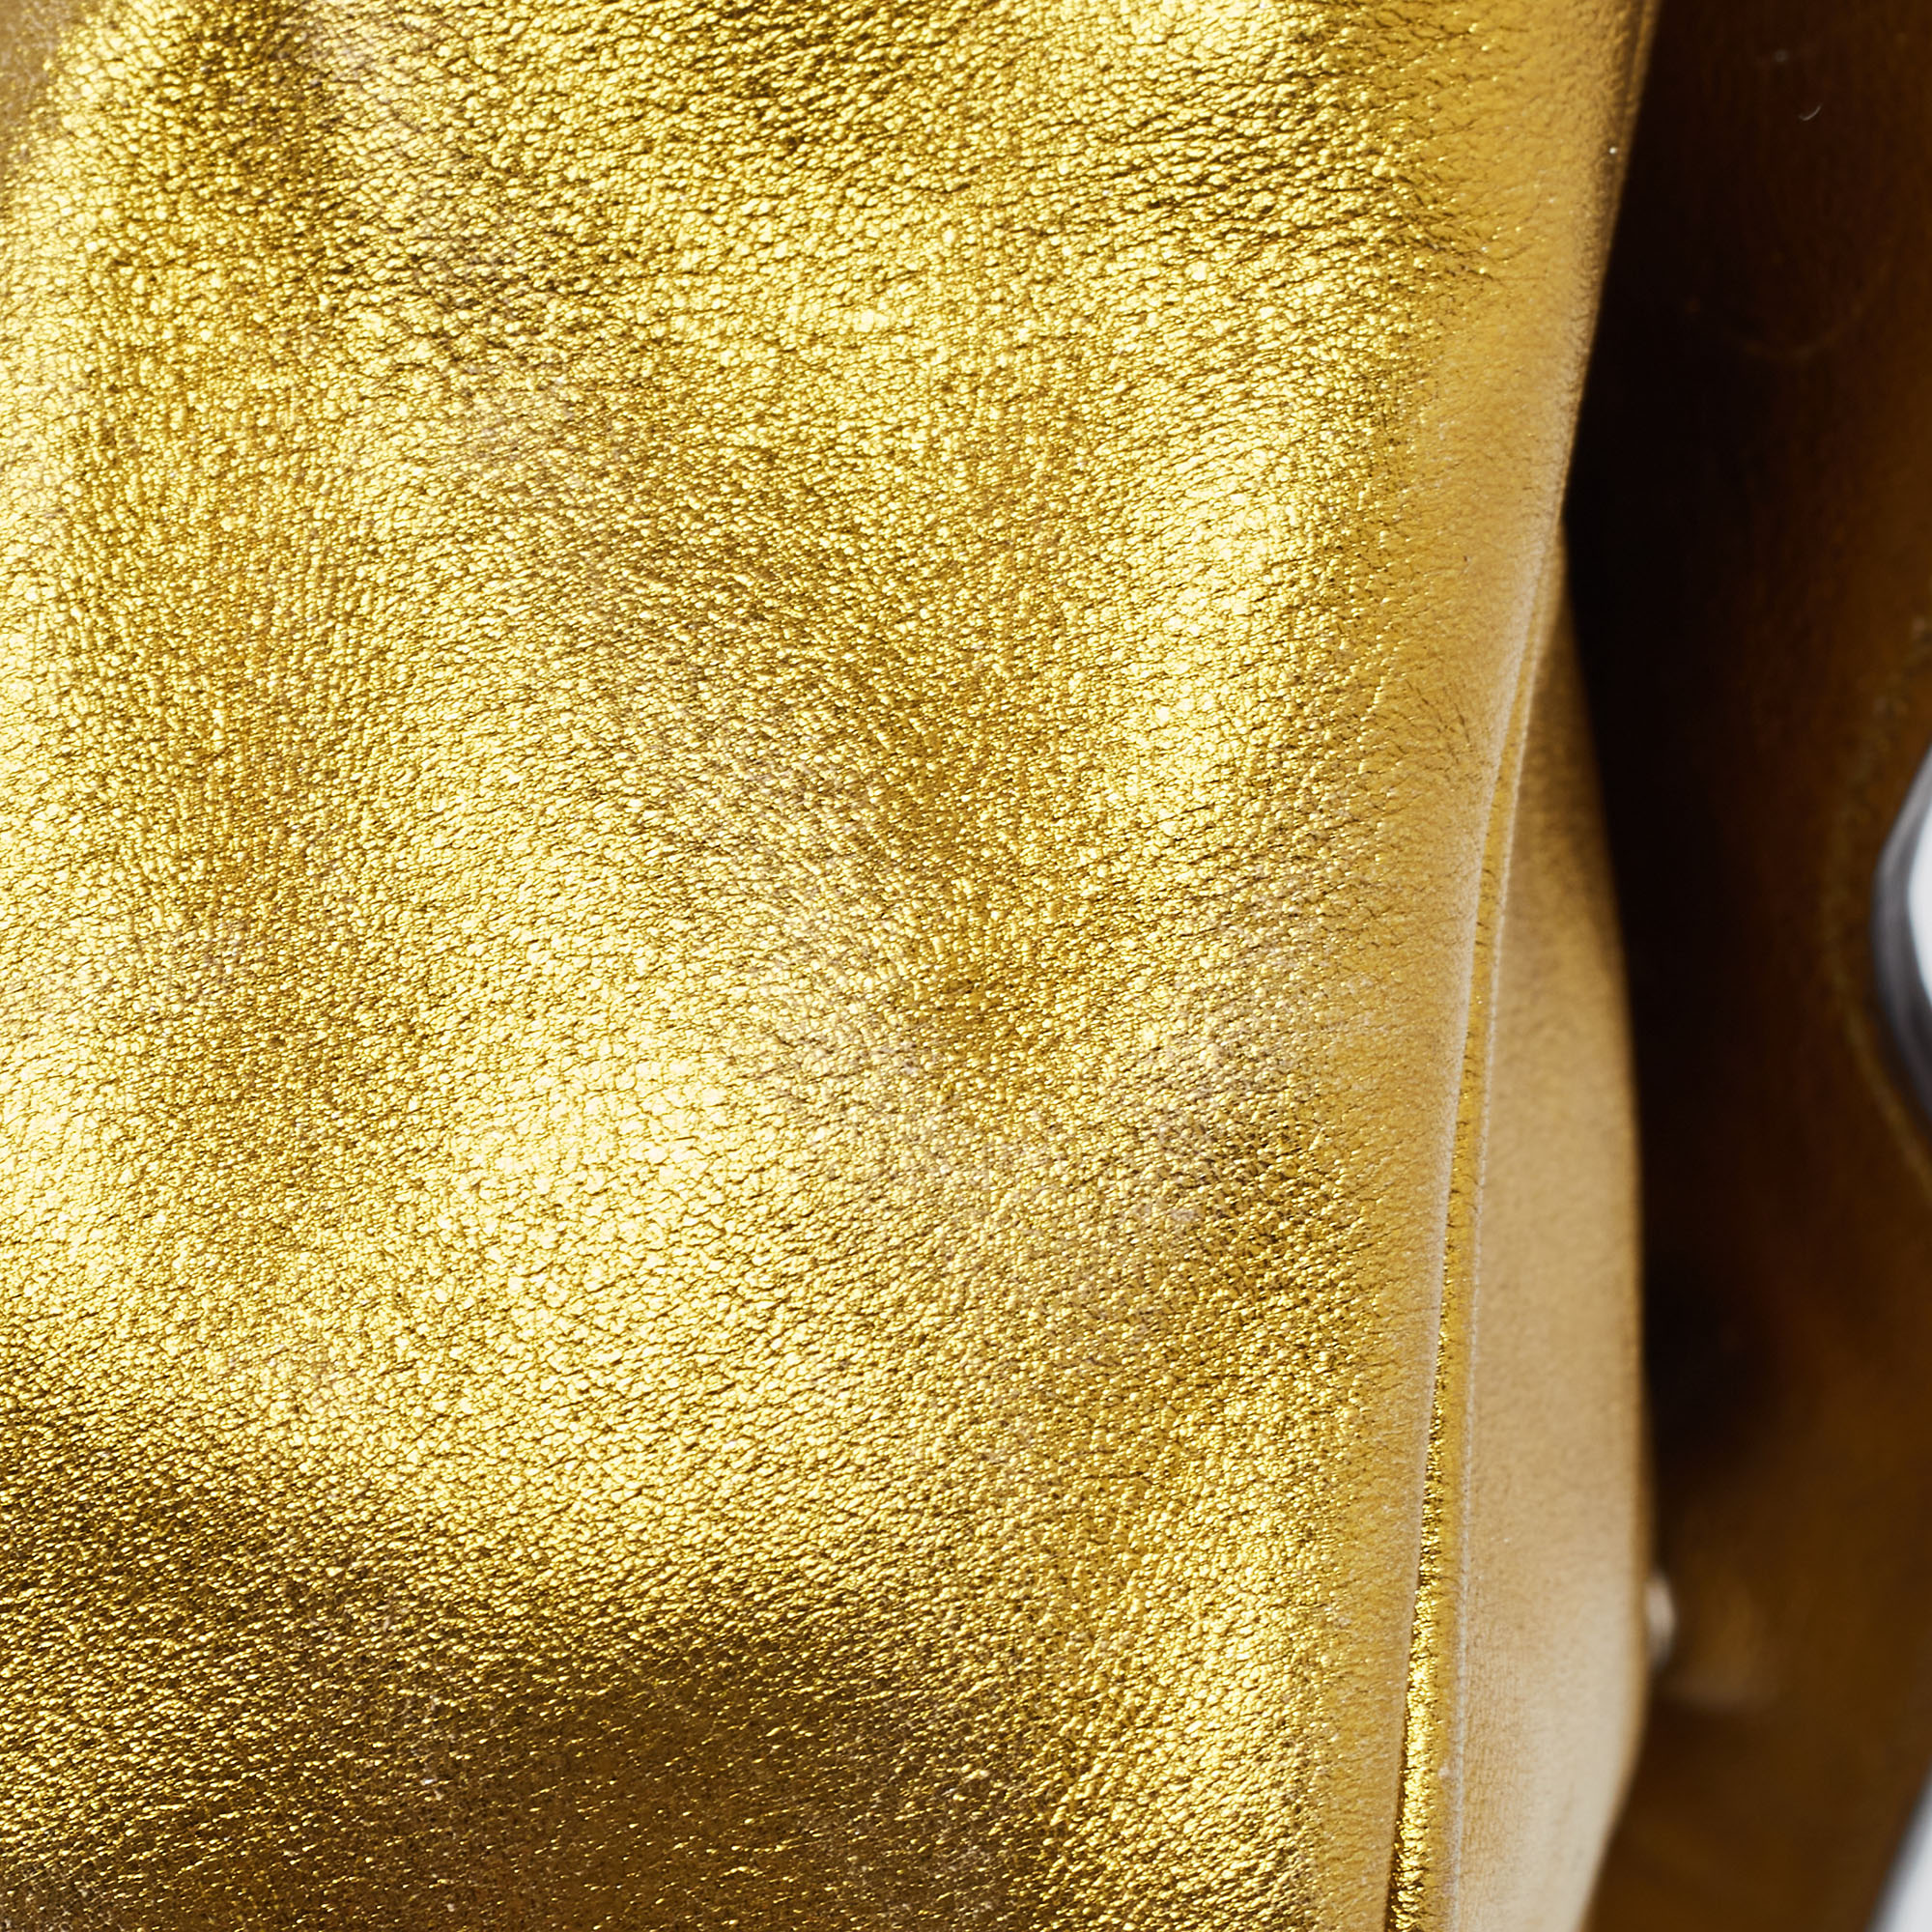 Dolce & Gabbana Gold Leather Chain Shoulder Bag